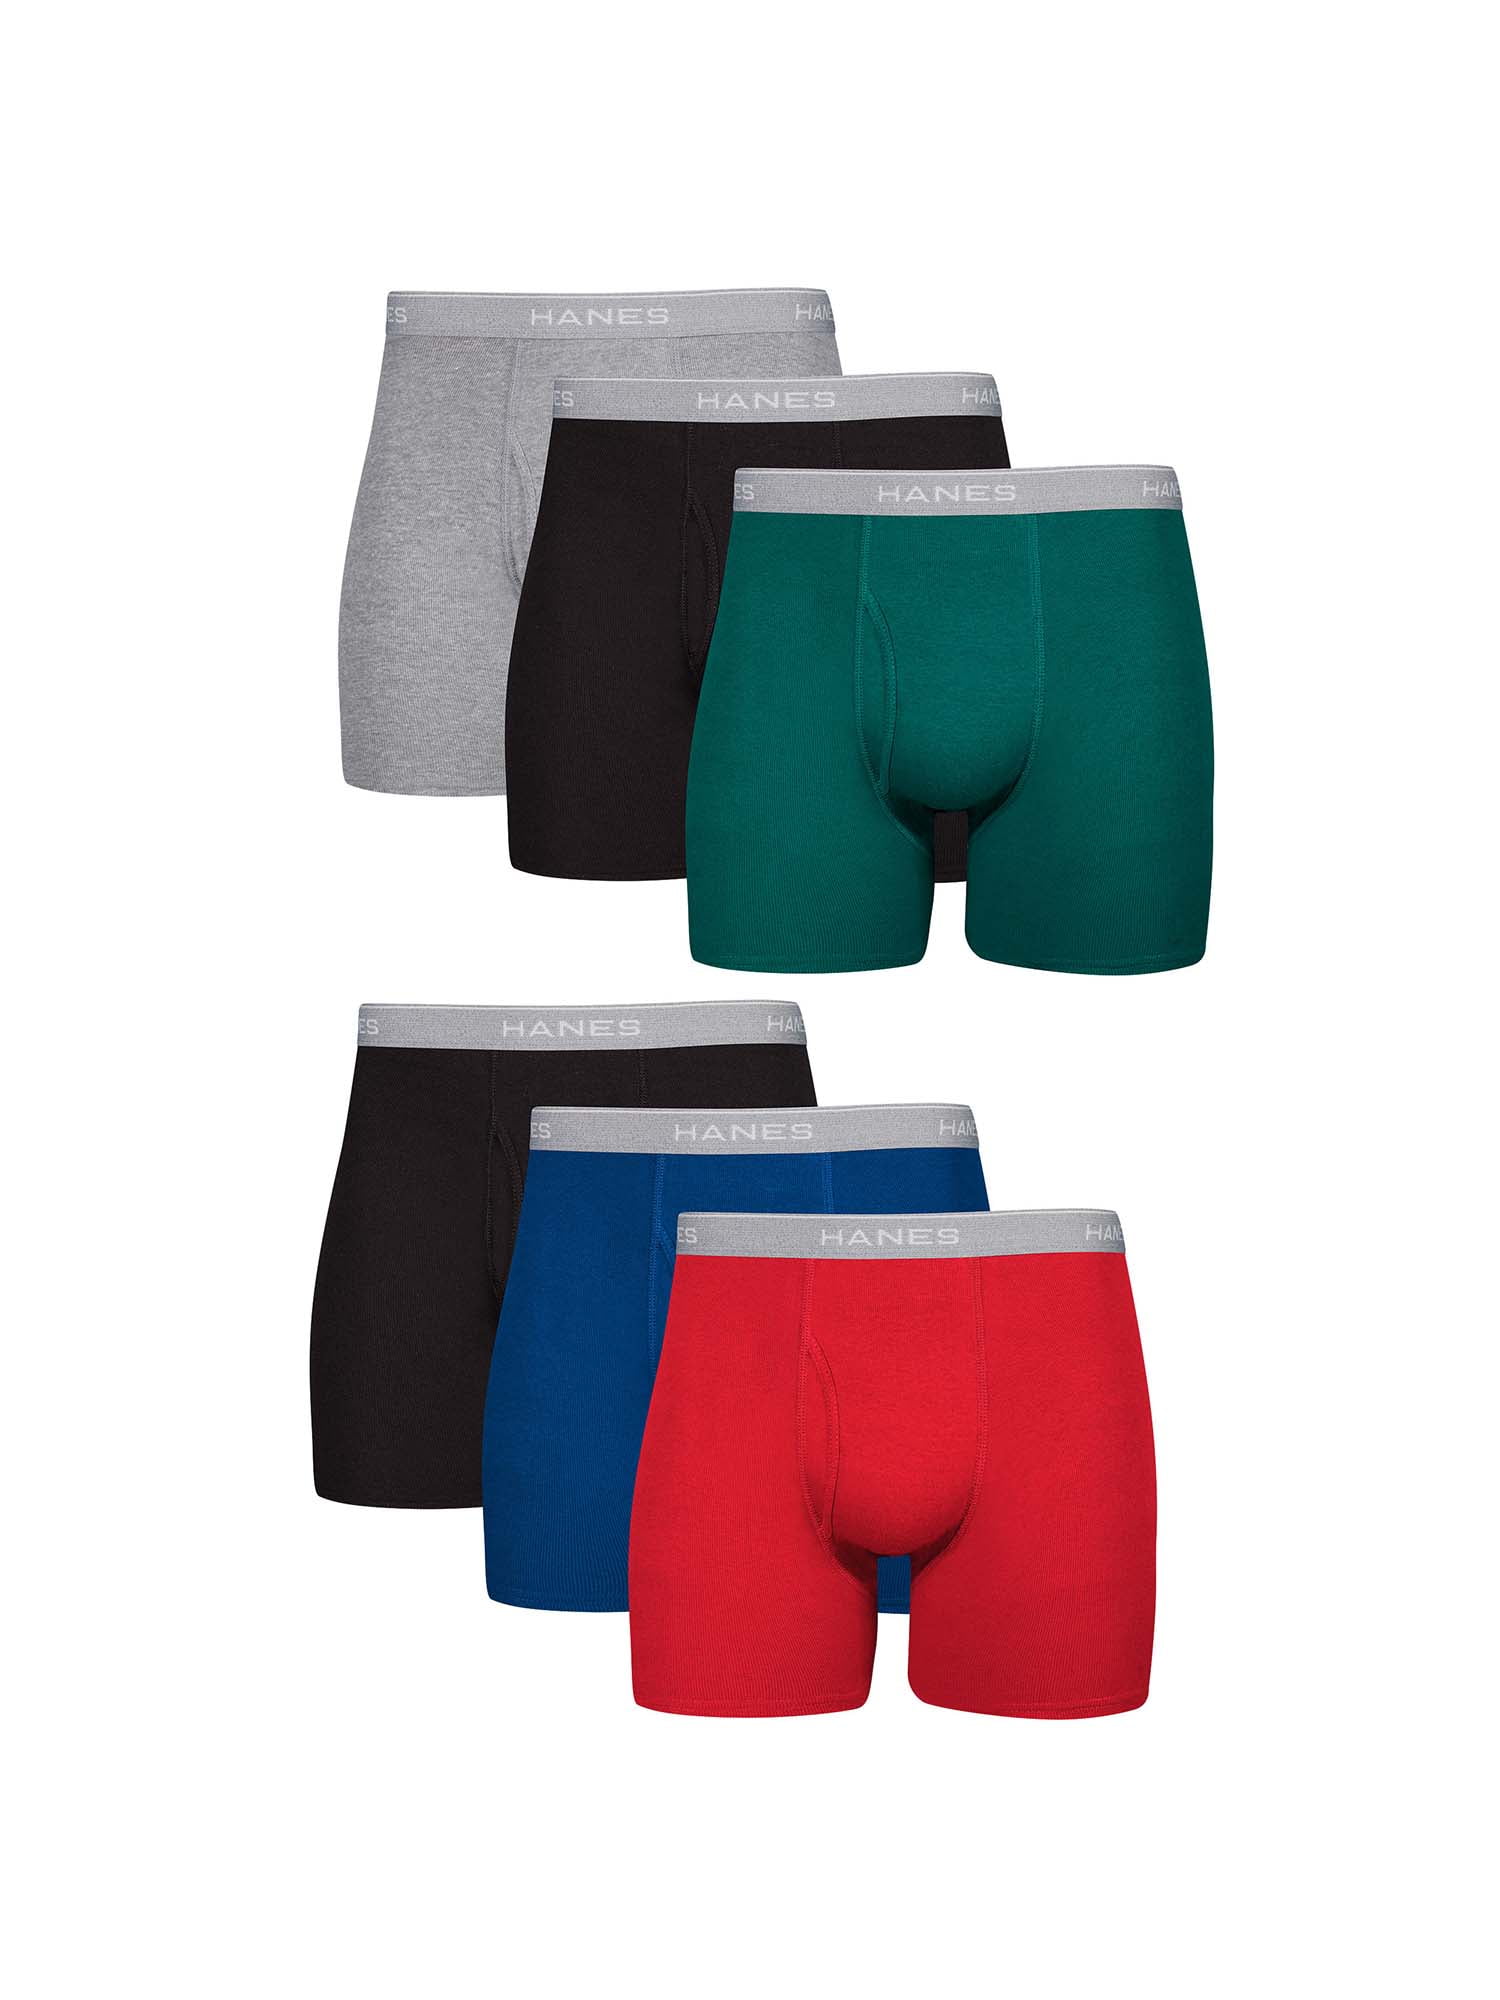 XXL M XL 6 Pairs Men's Underwear Assorted Classic Sports Men's Boxer Shorts S 